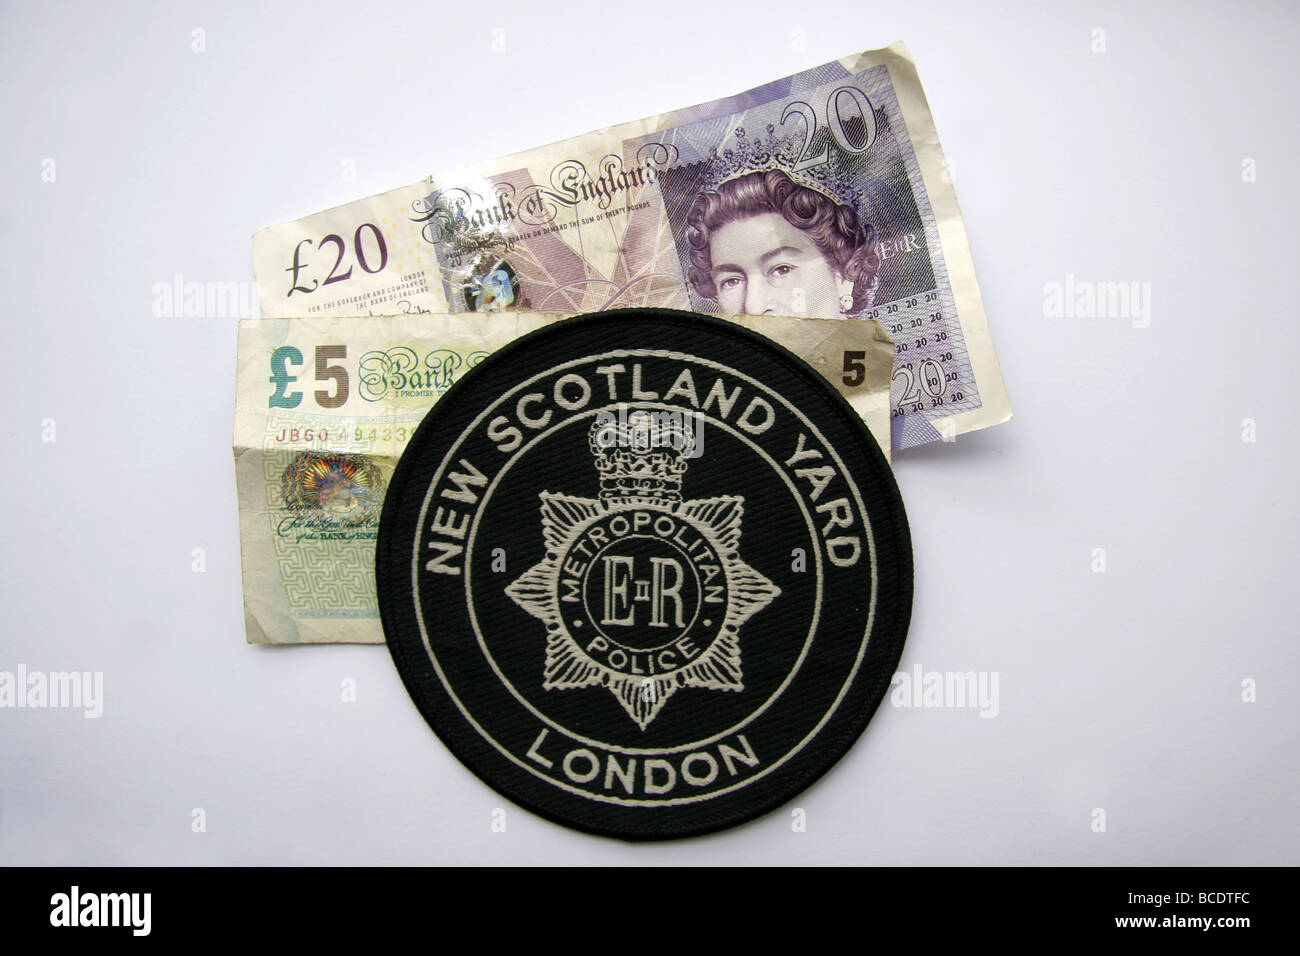 London Metropolitan Police New Scotland Yard patch and British money Stock Photo